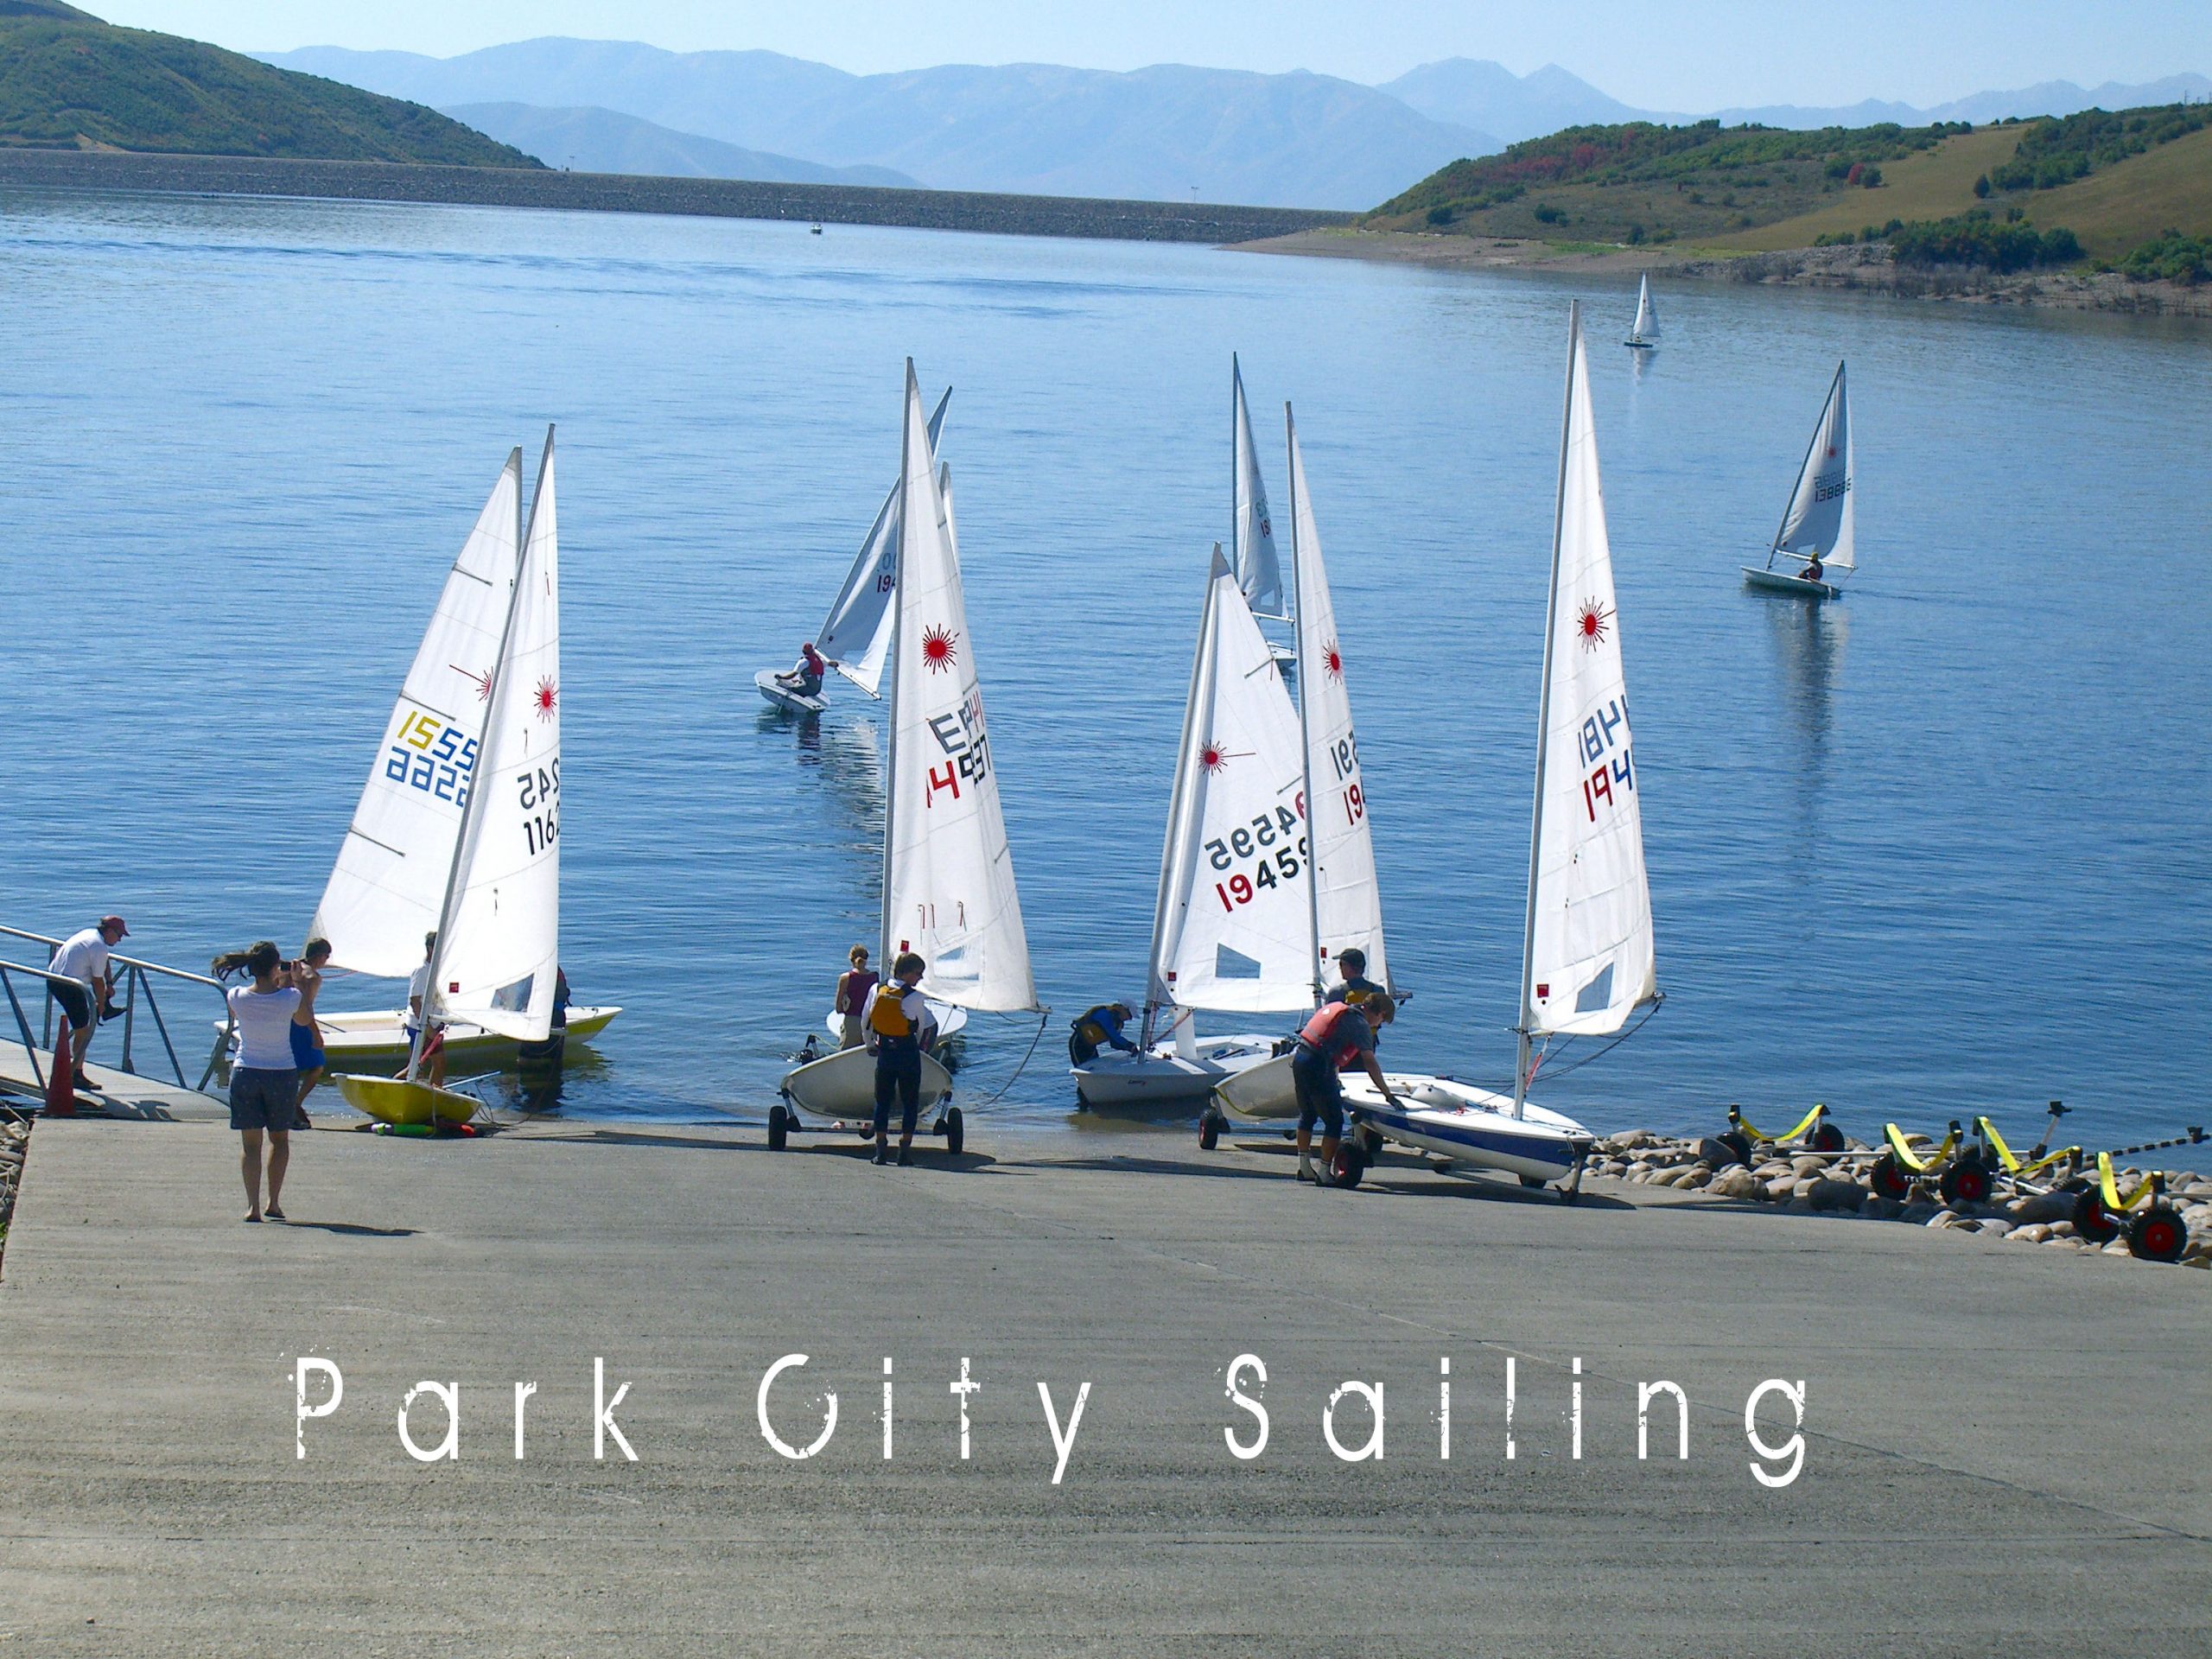 Park City Sailing